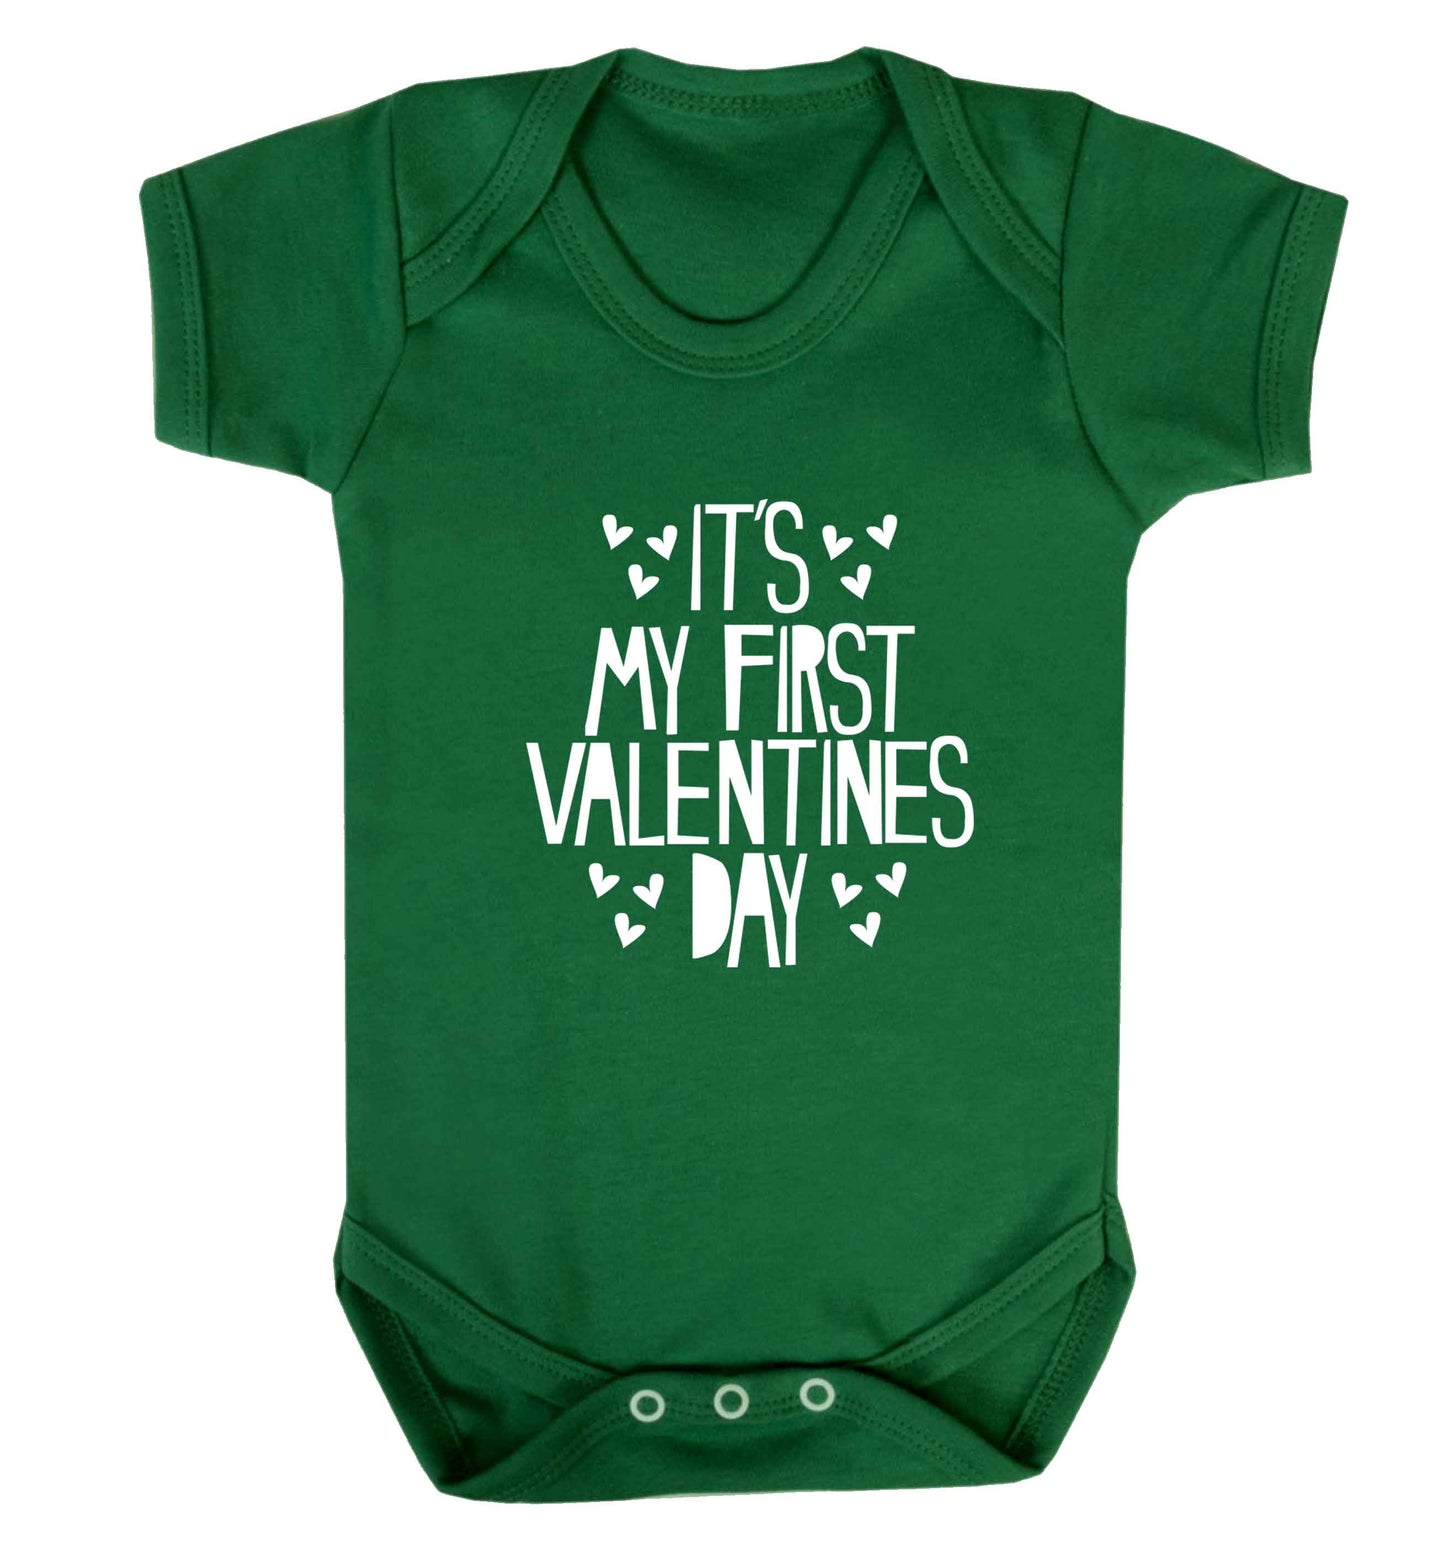 Hearts It's my First Valentine's Day baby vest green 18-24 months